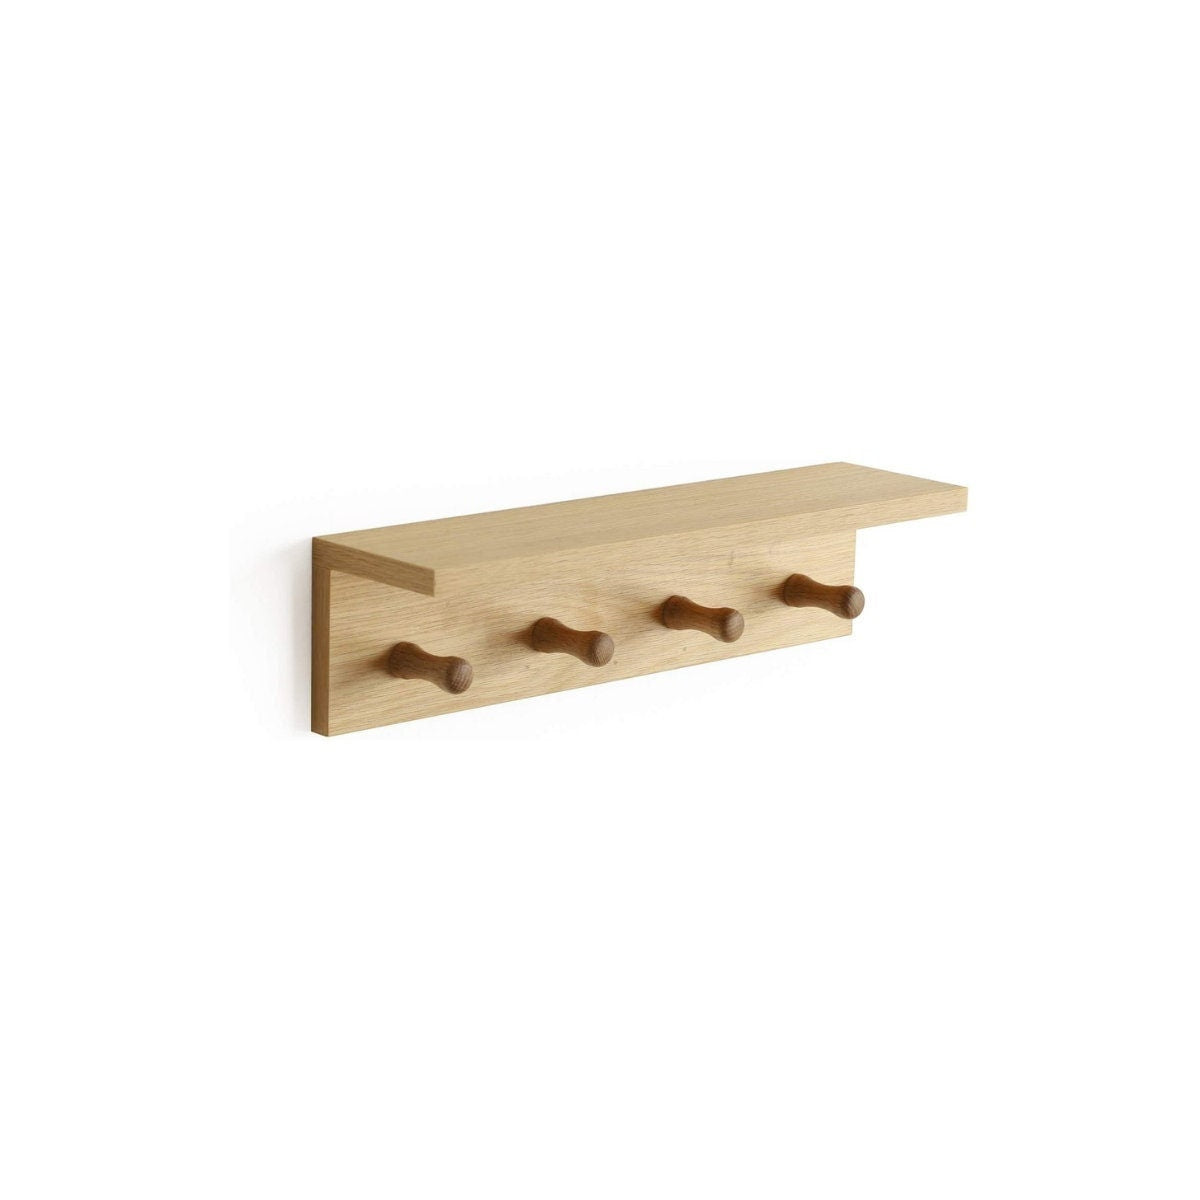 Shelf with hooks | towel rack | Kitchen decor | Wooden peg rail | wooden  peg rack | coat hanger | entryway decor | minimalist | hook rack